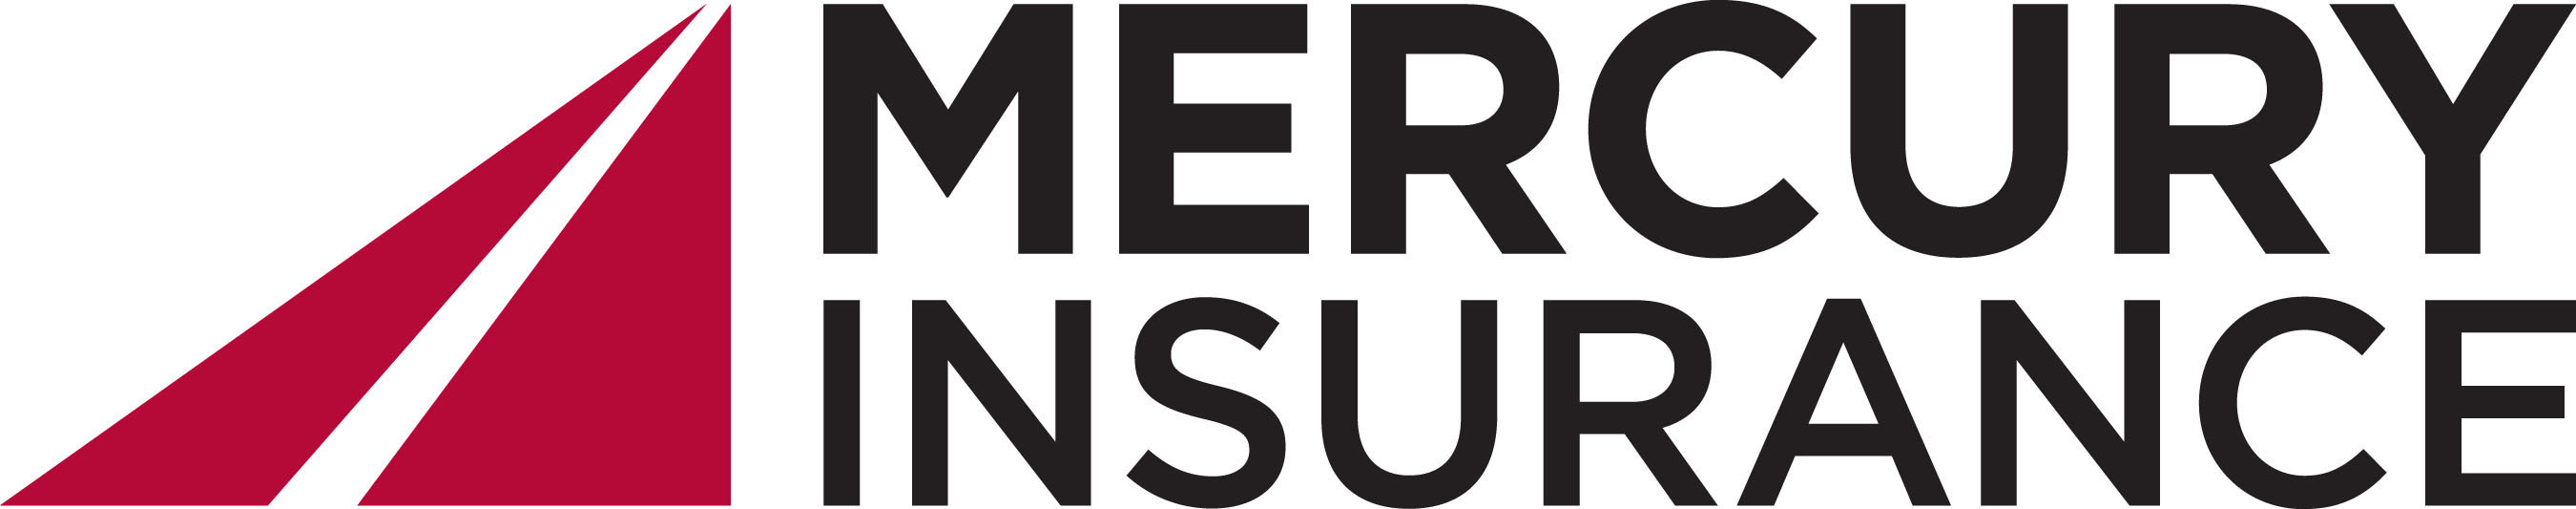 Mercury Insurance Launches Ride-Hailing Insurance For Nevada’s Uber